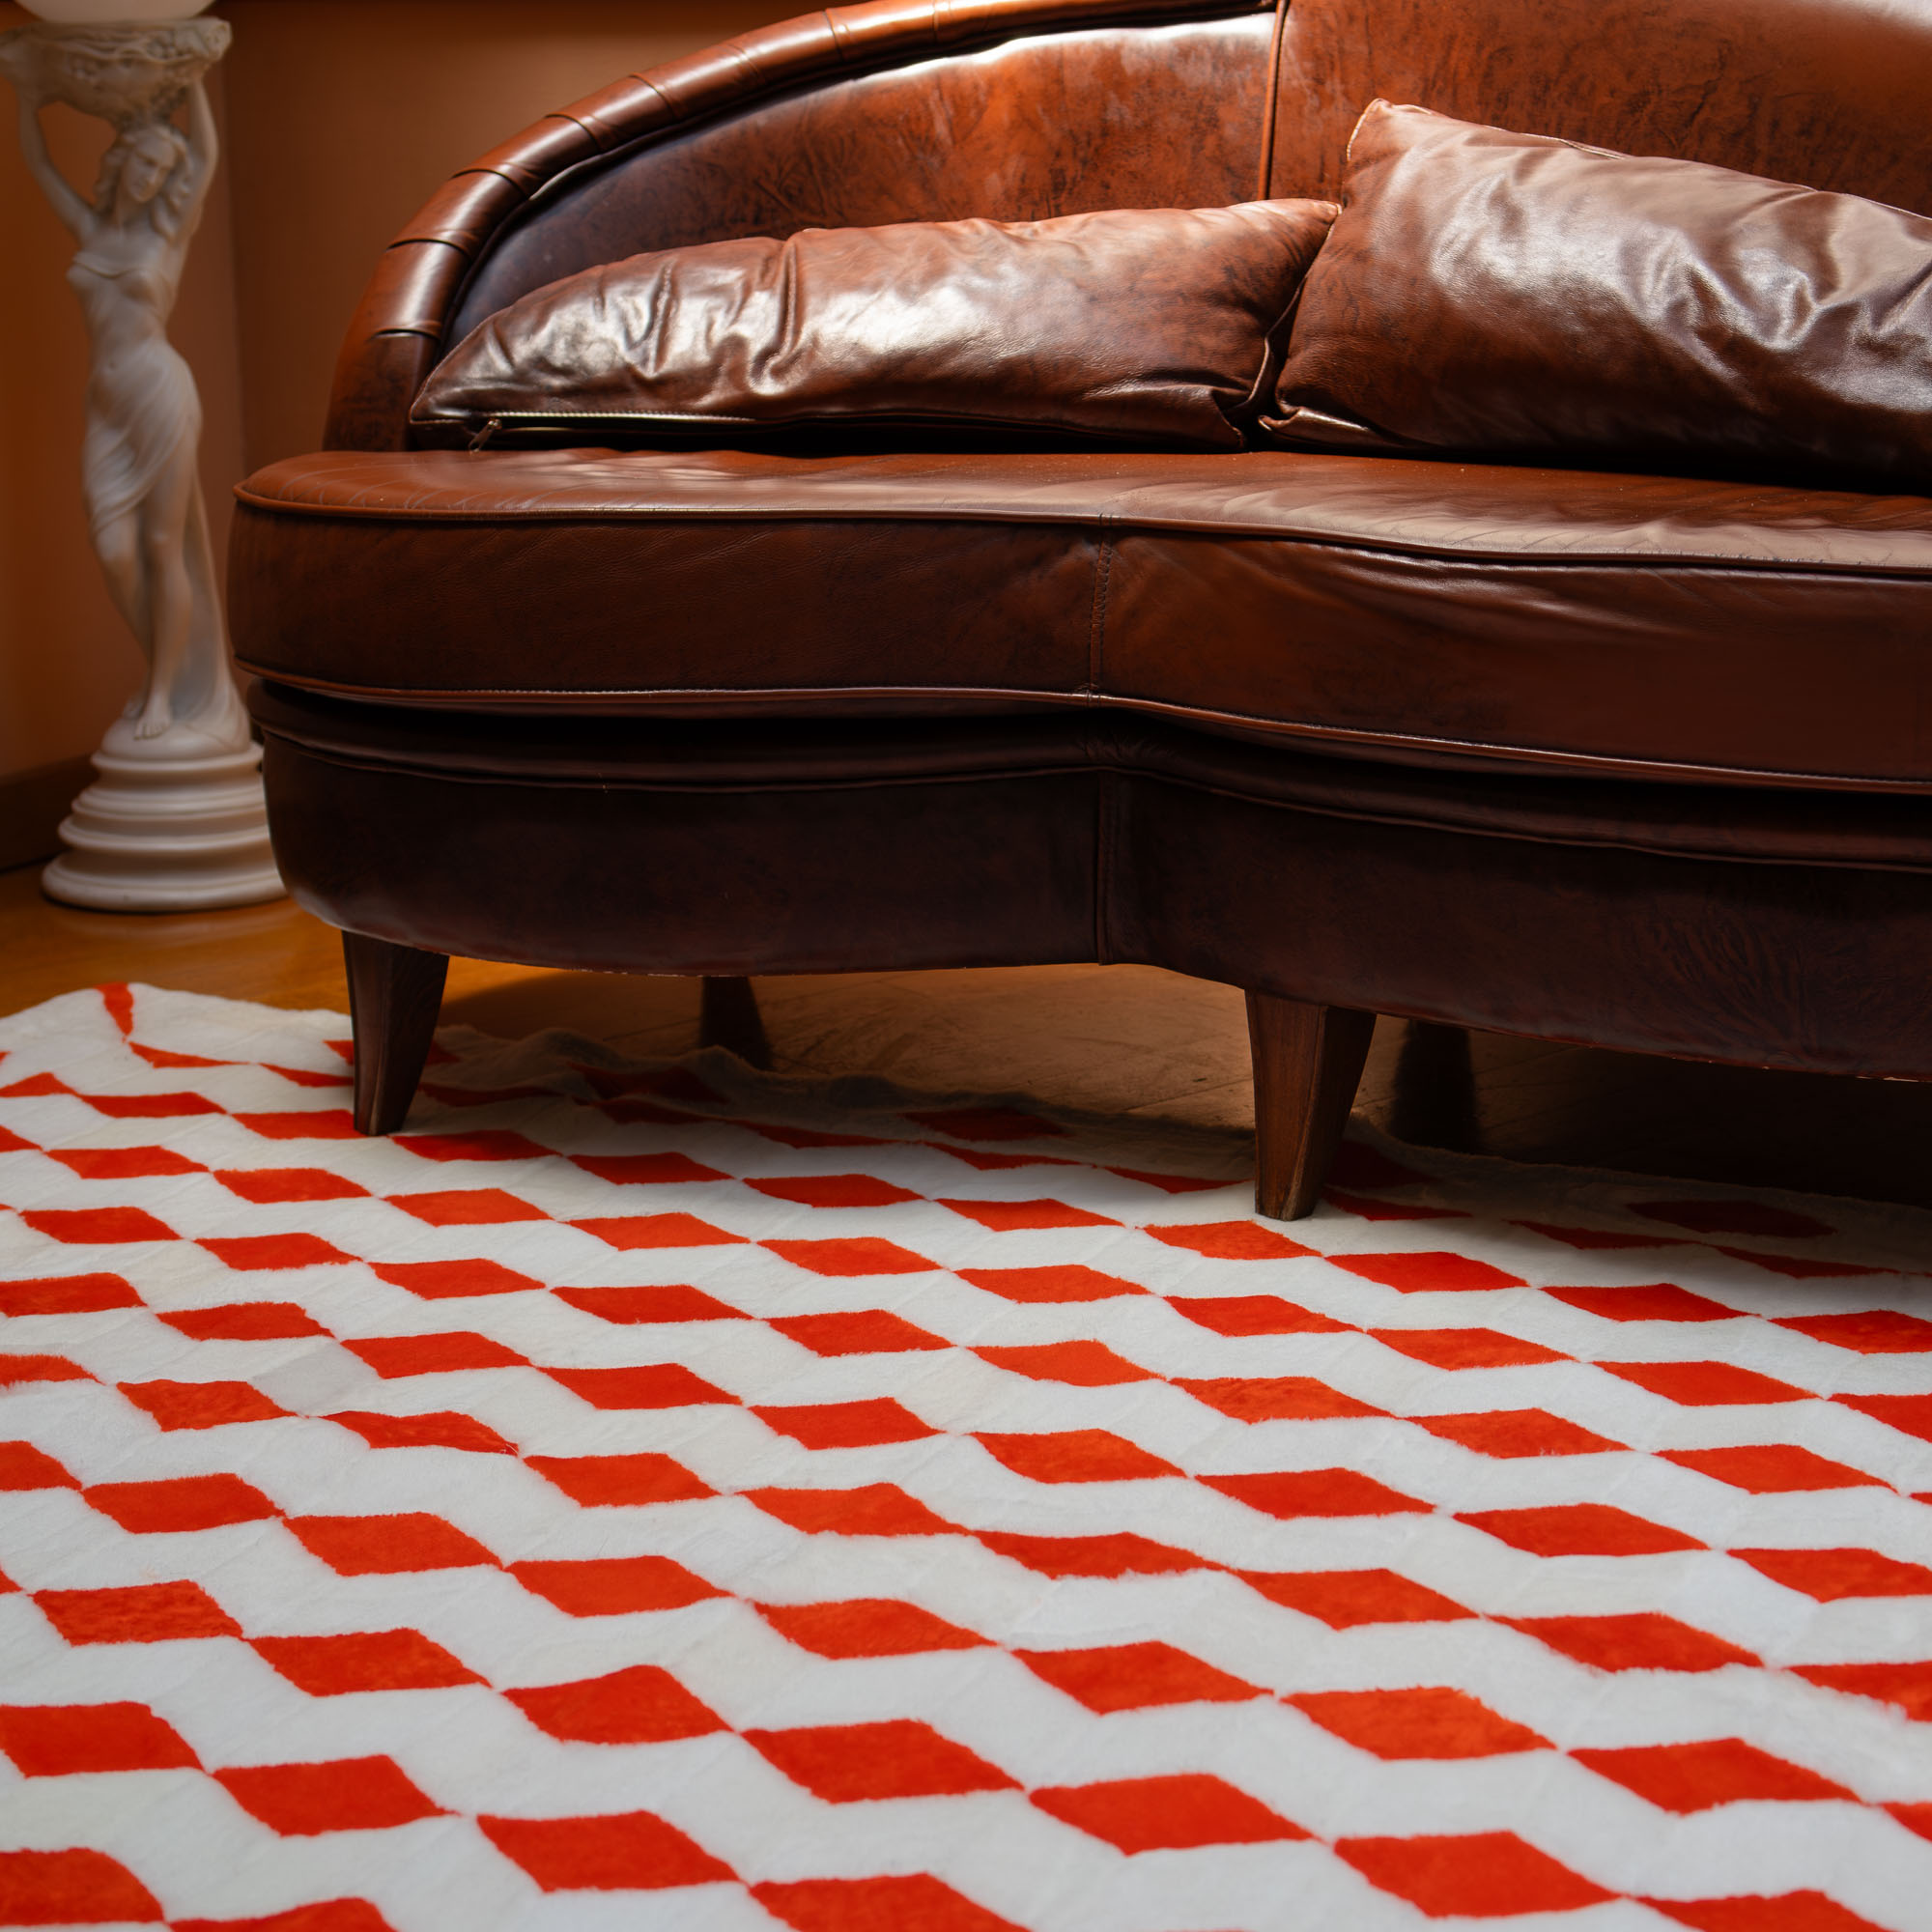 Red sheepskin fur carpet in a chess pattern